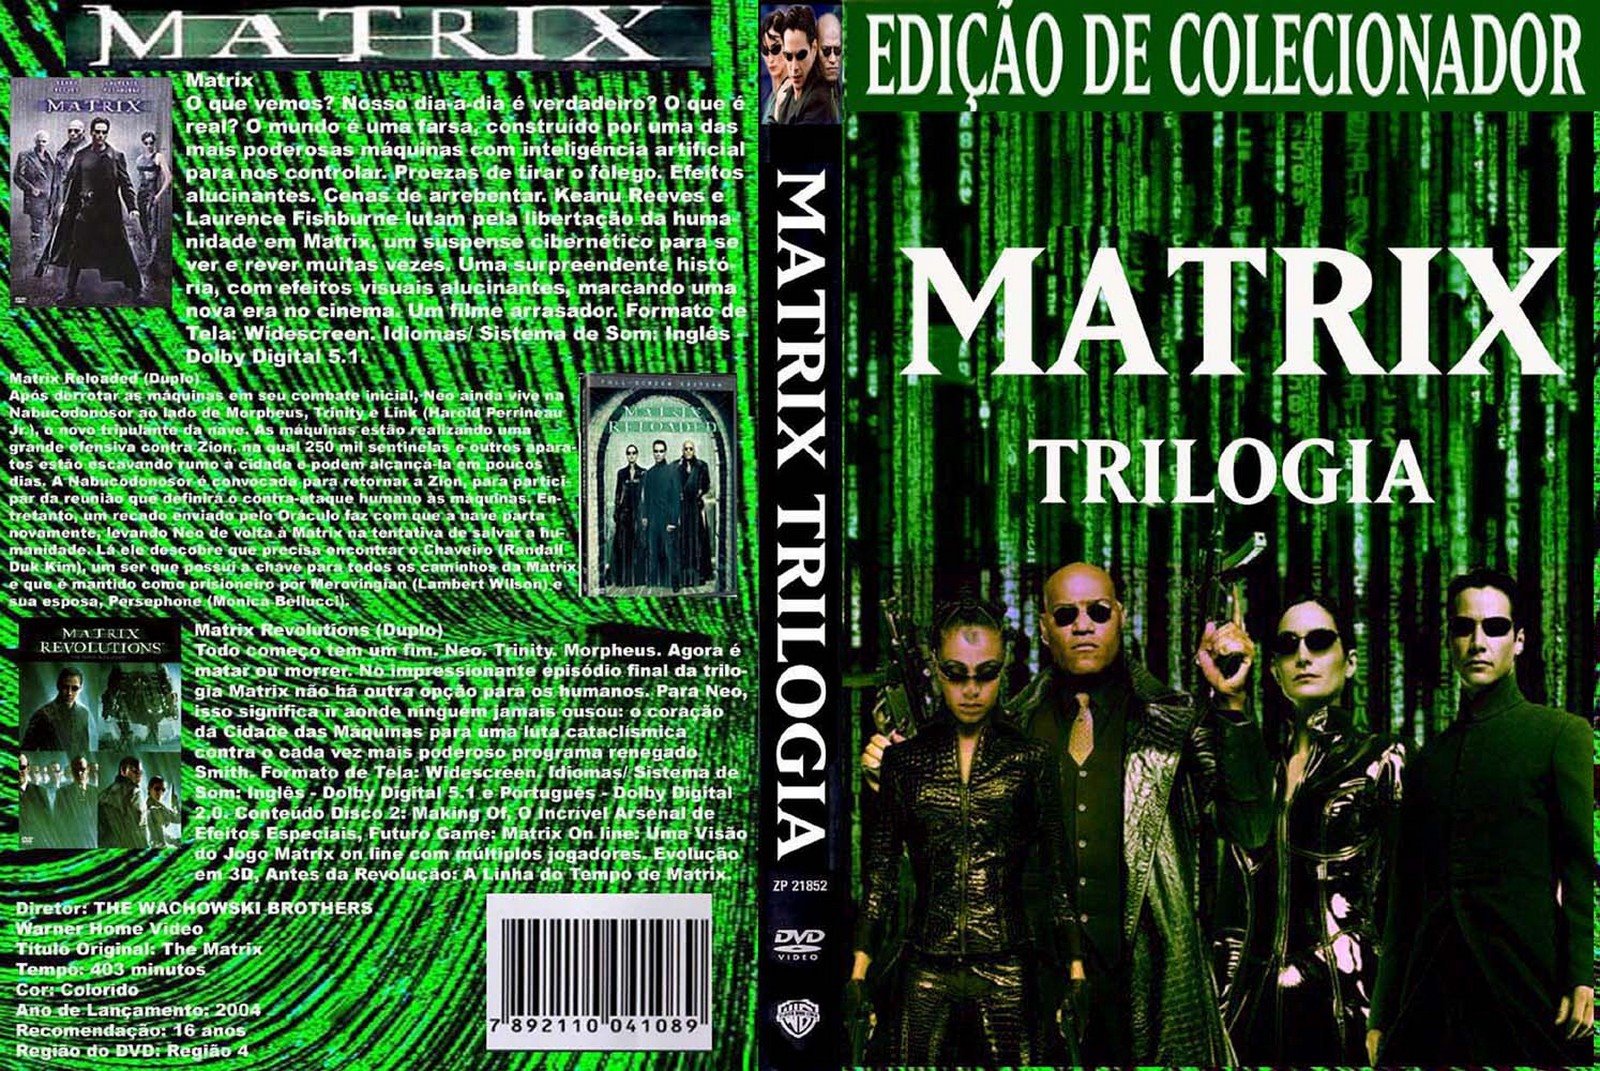 https://blogger.googleusercontent.com/img/b/R29vZ2xl/AVvXsEh2Cwz3Qs48hnXx2RkJlarDPfBDuzLlk96nhhrGXWkYVtaKTBrBX75jL9j8NulWQK0eANGcUA0pK4ALFJpjJfxBw8yiy07aYEcxpjbPeARswYFJShmdDNjEQS69g1eWEFFNMqvXVGgZrlM/s1600/matrix-trilogia.jpg